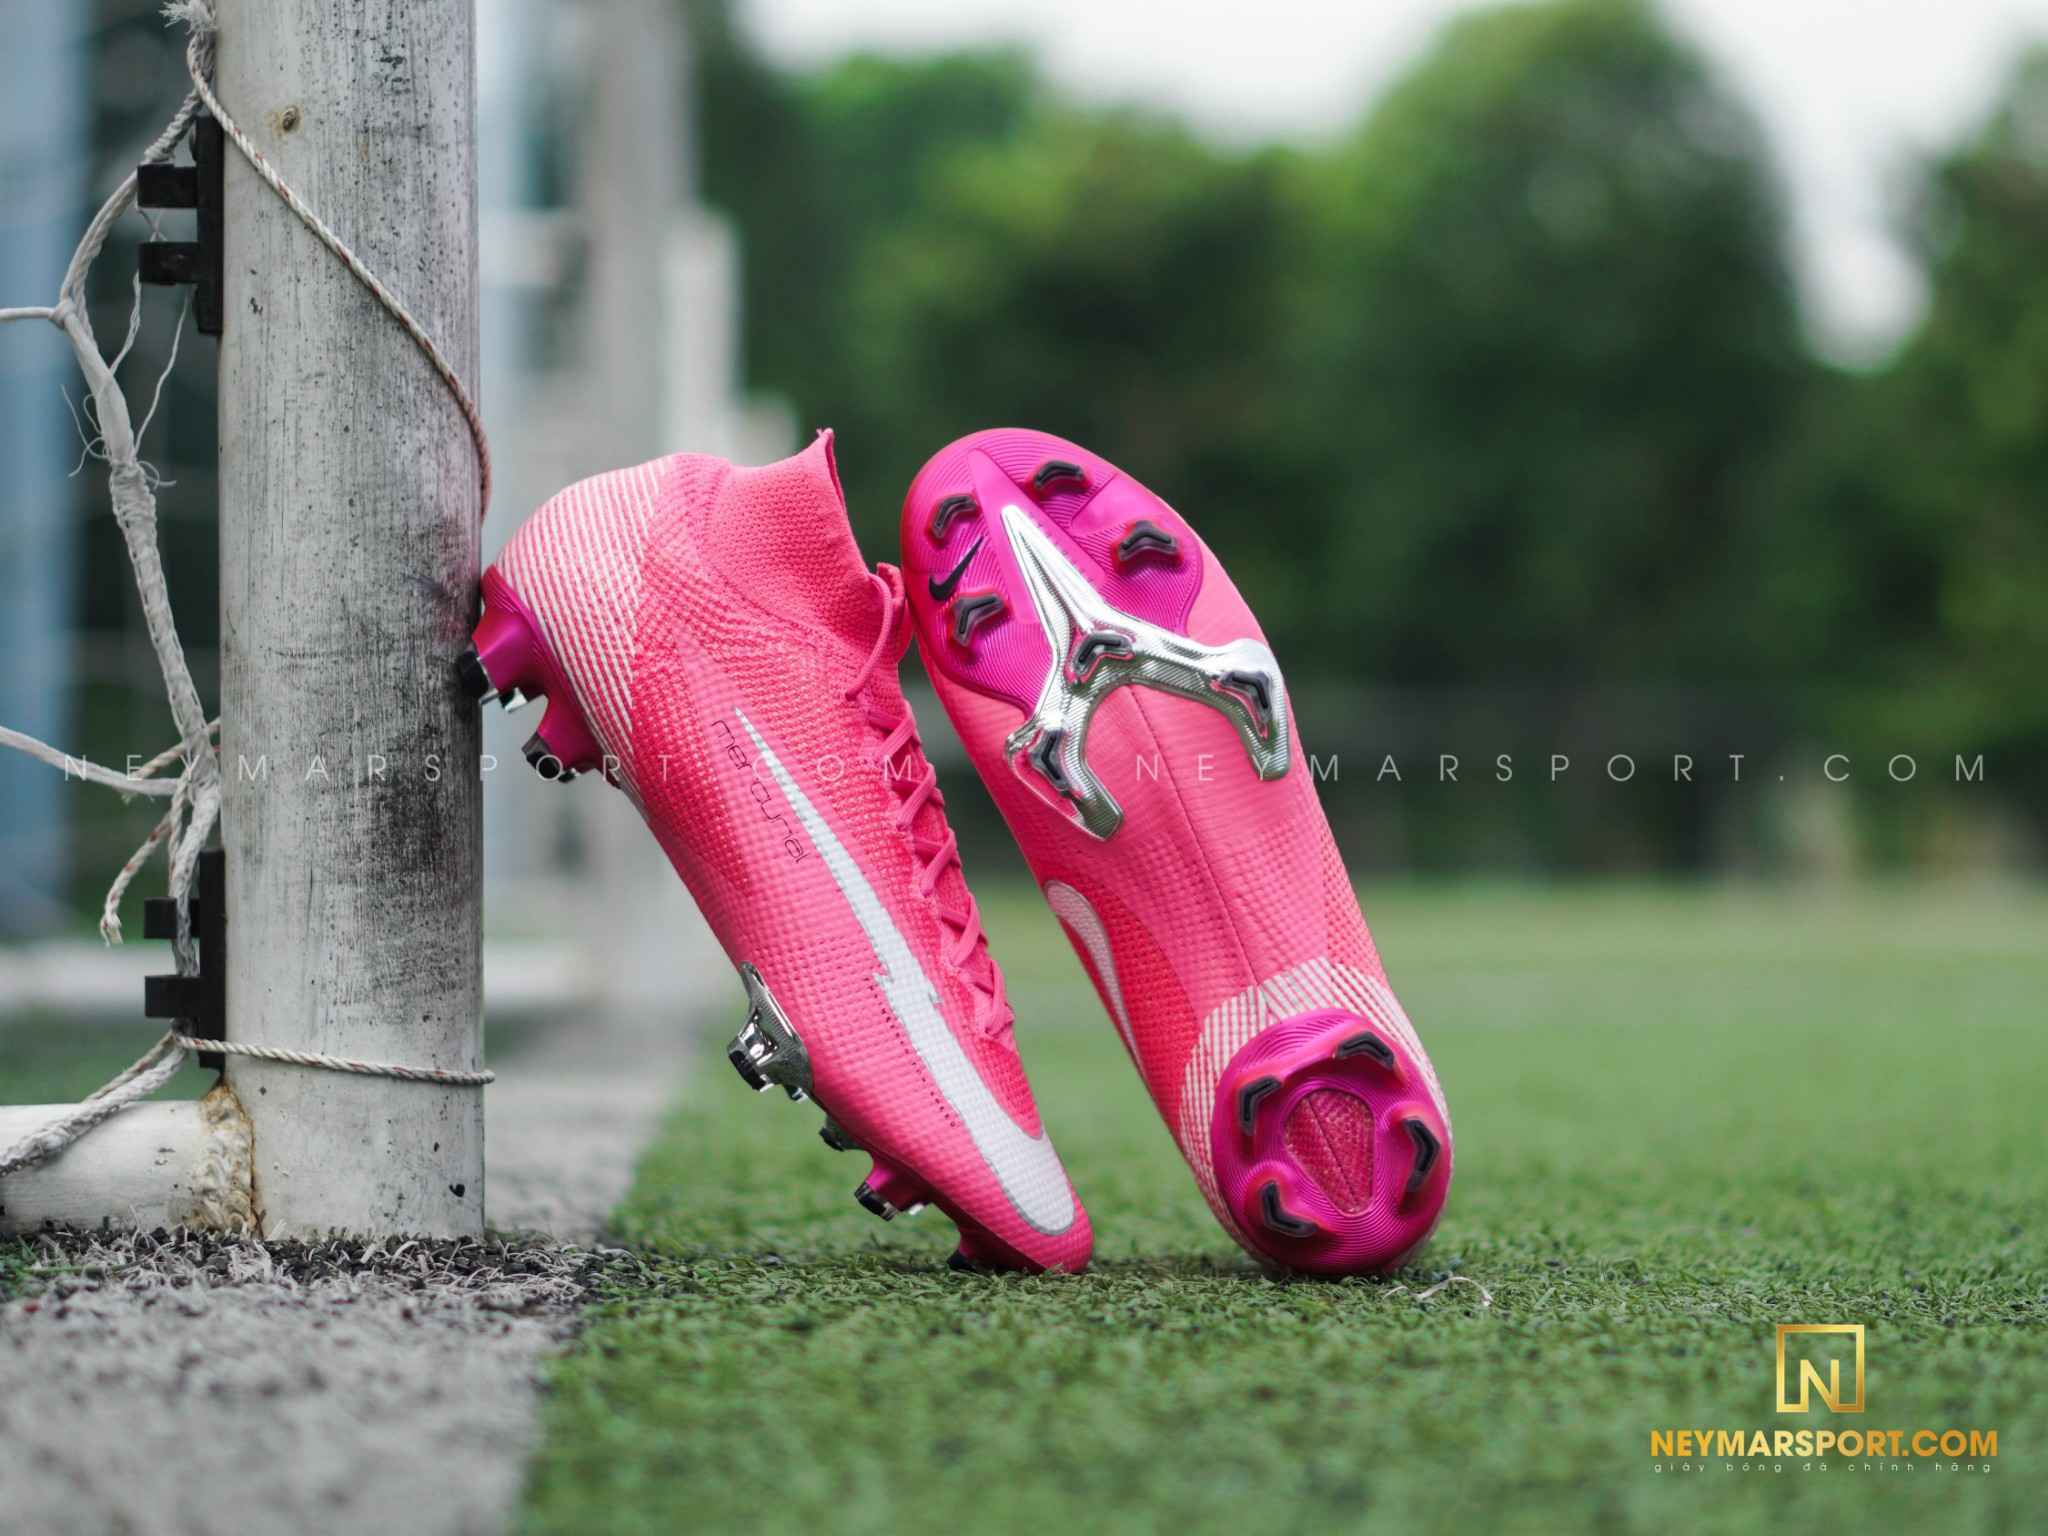 Giày đá bóng Nike Mercurial Mbappé Rosa